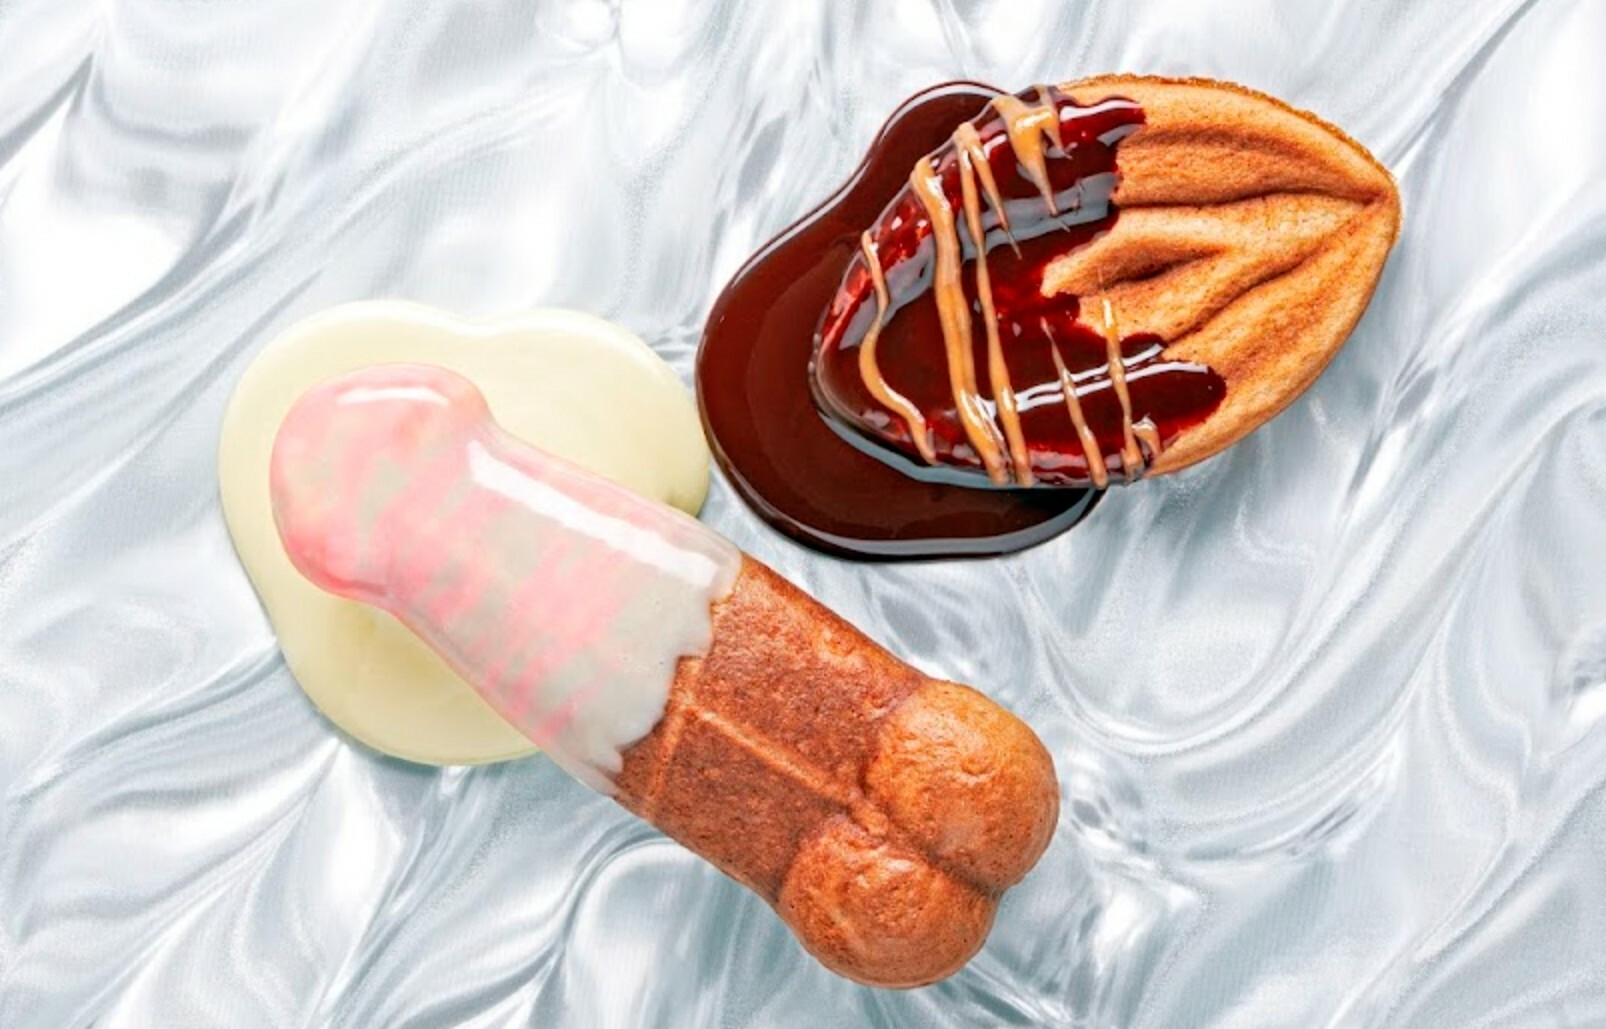 Peanut butter penis